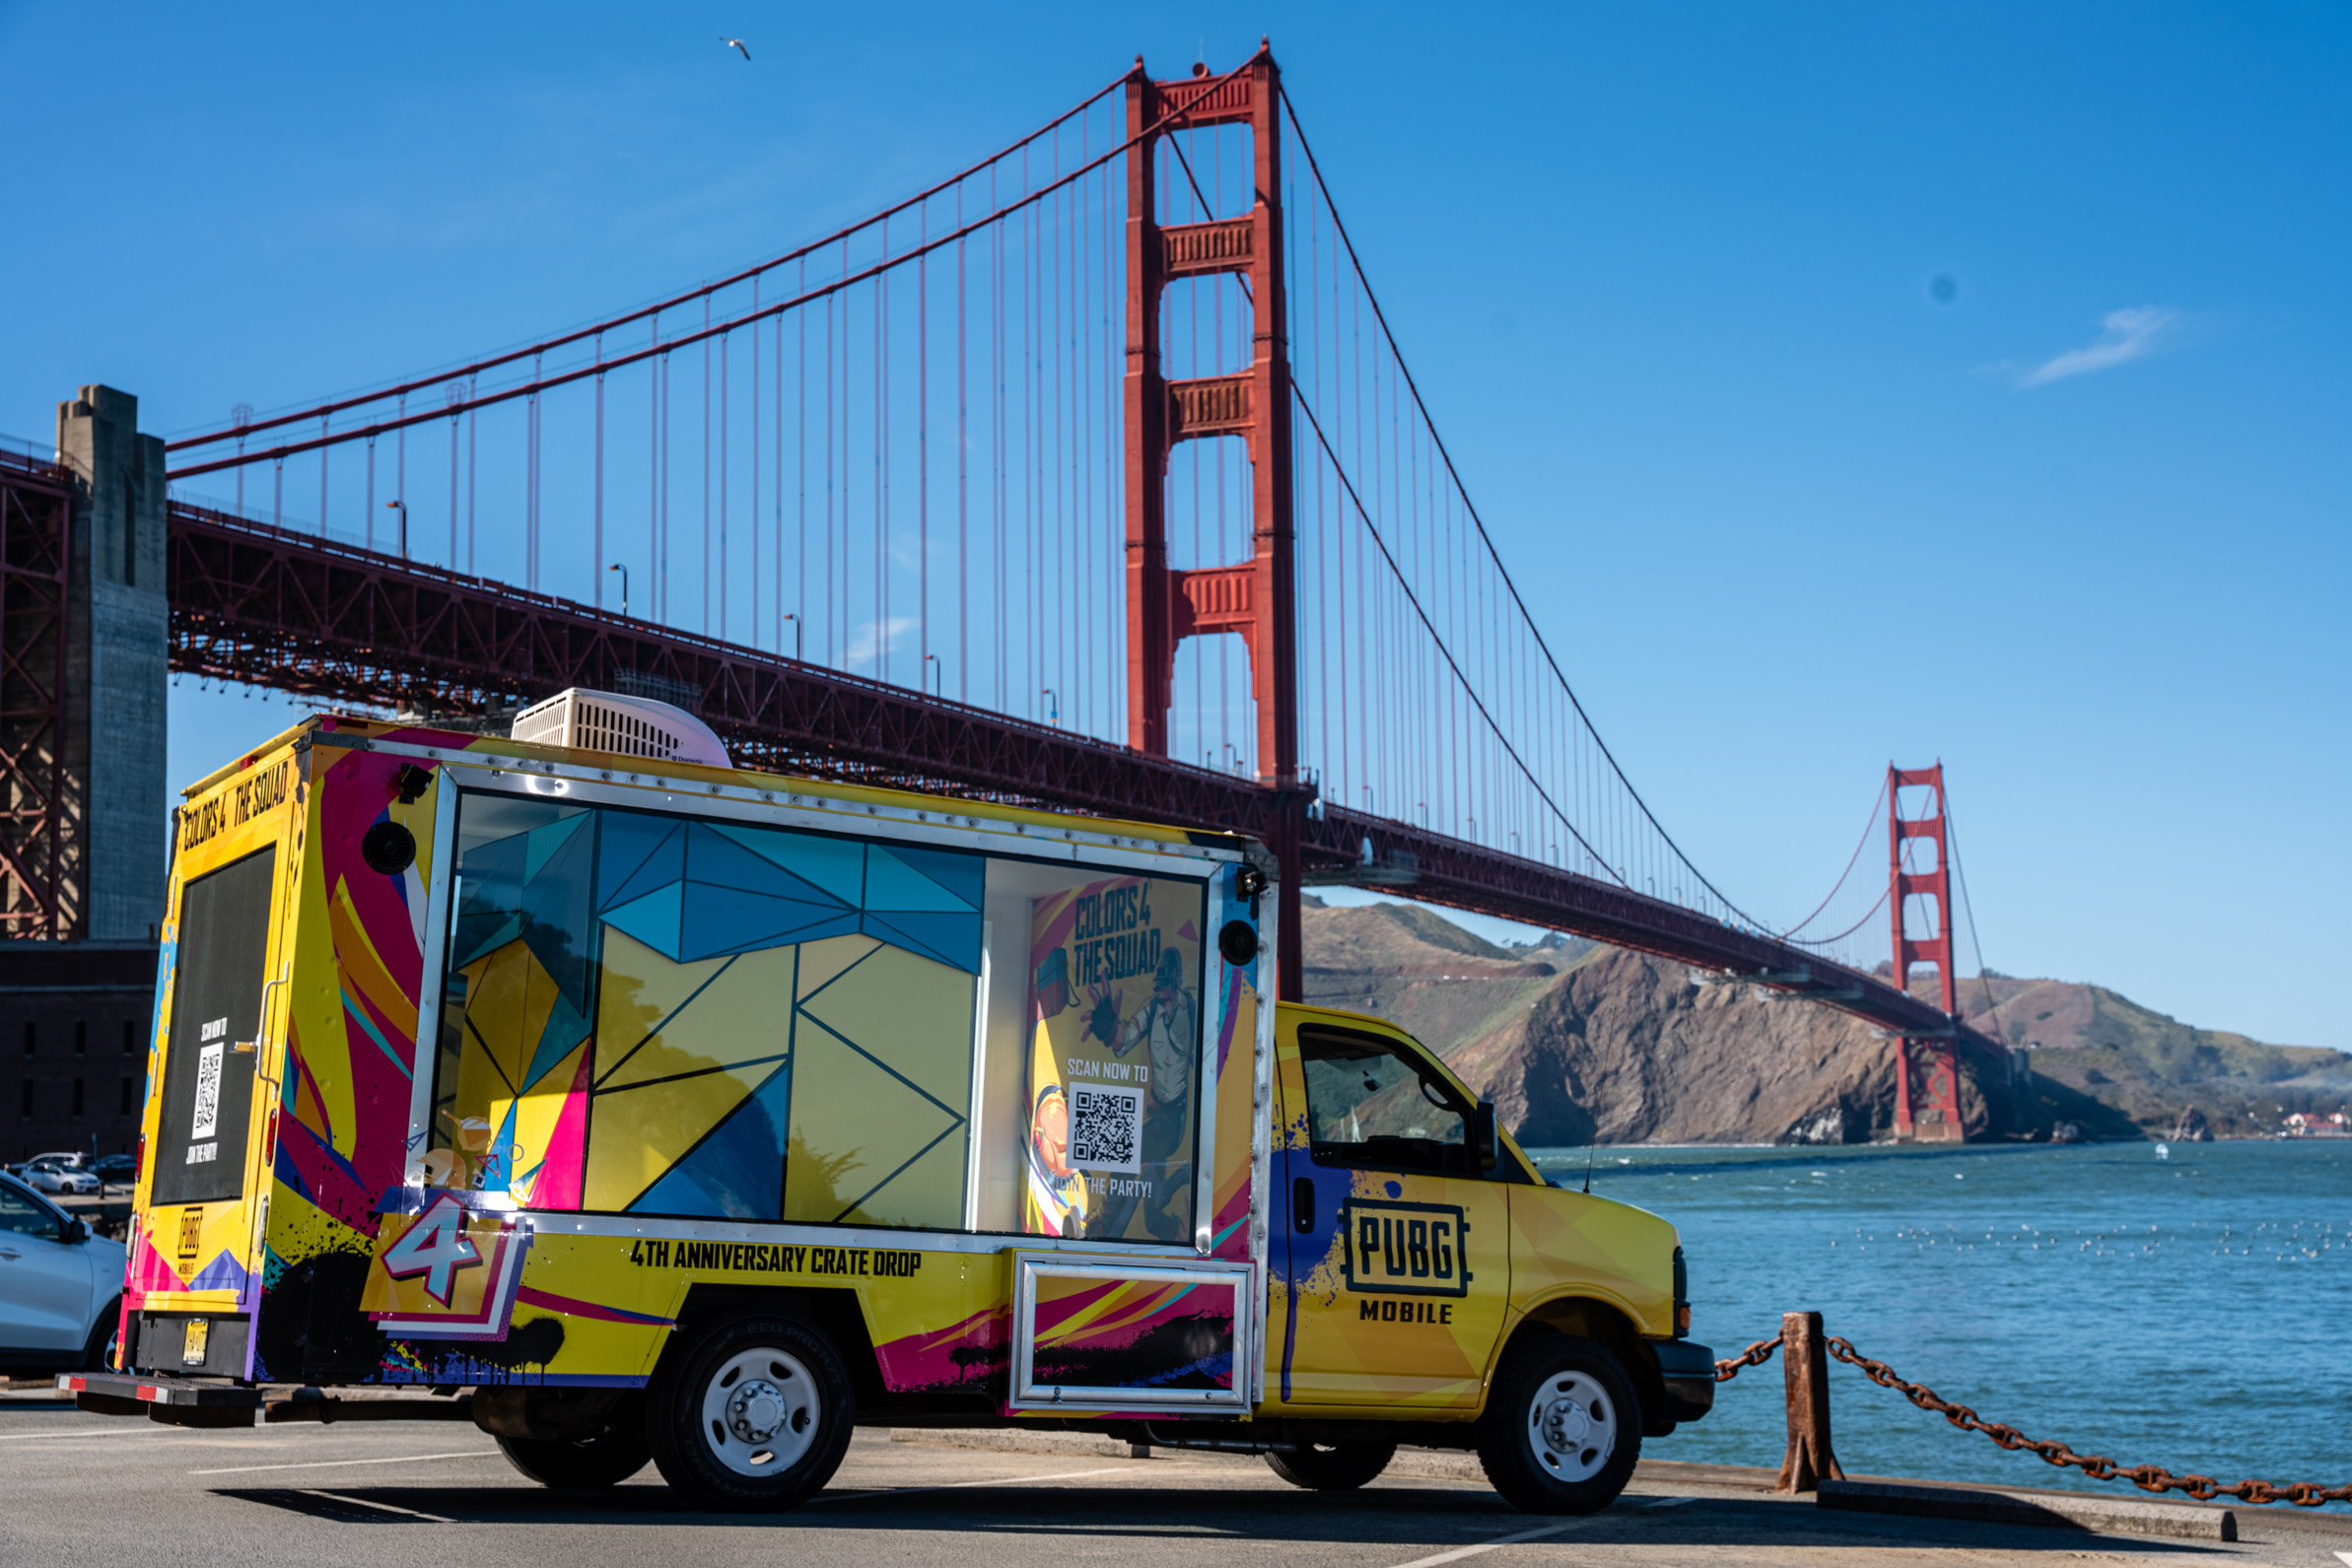 Branded PUBG food truck in front of Golden Gate bridge in San Francisco, CA